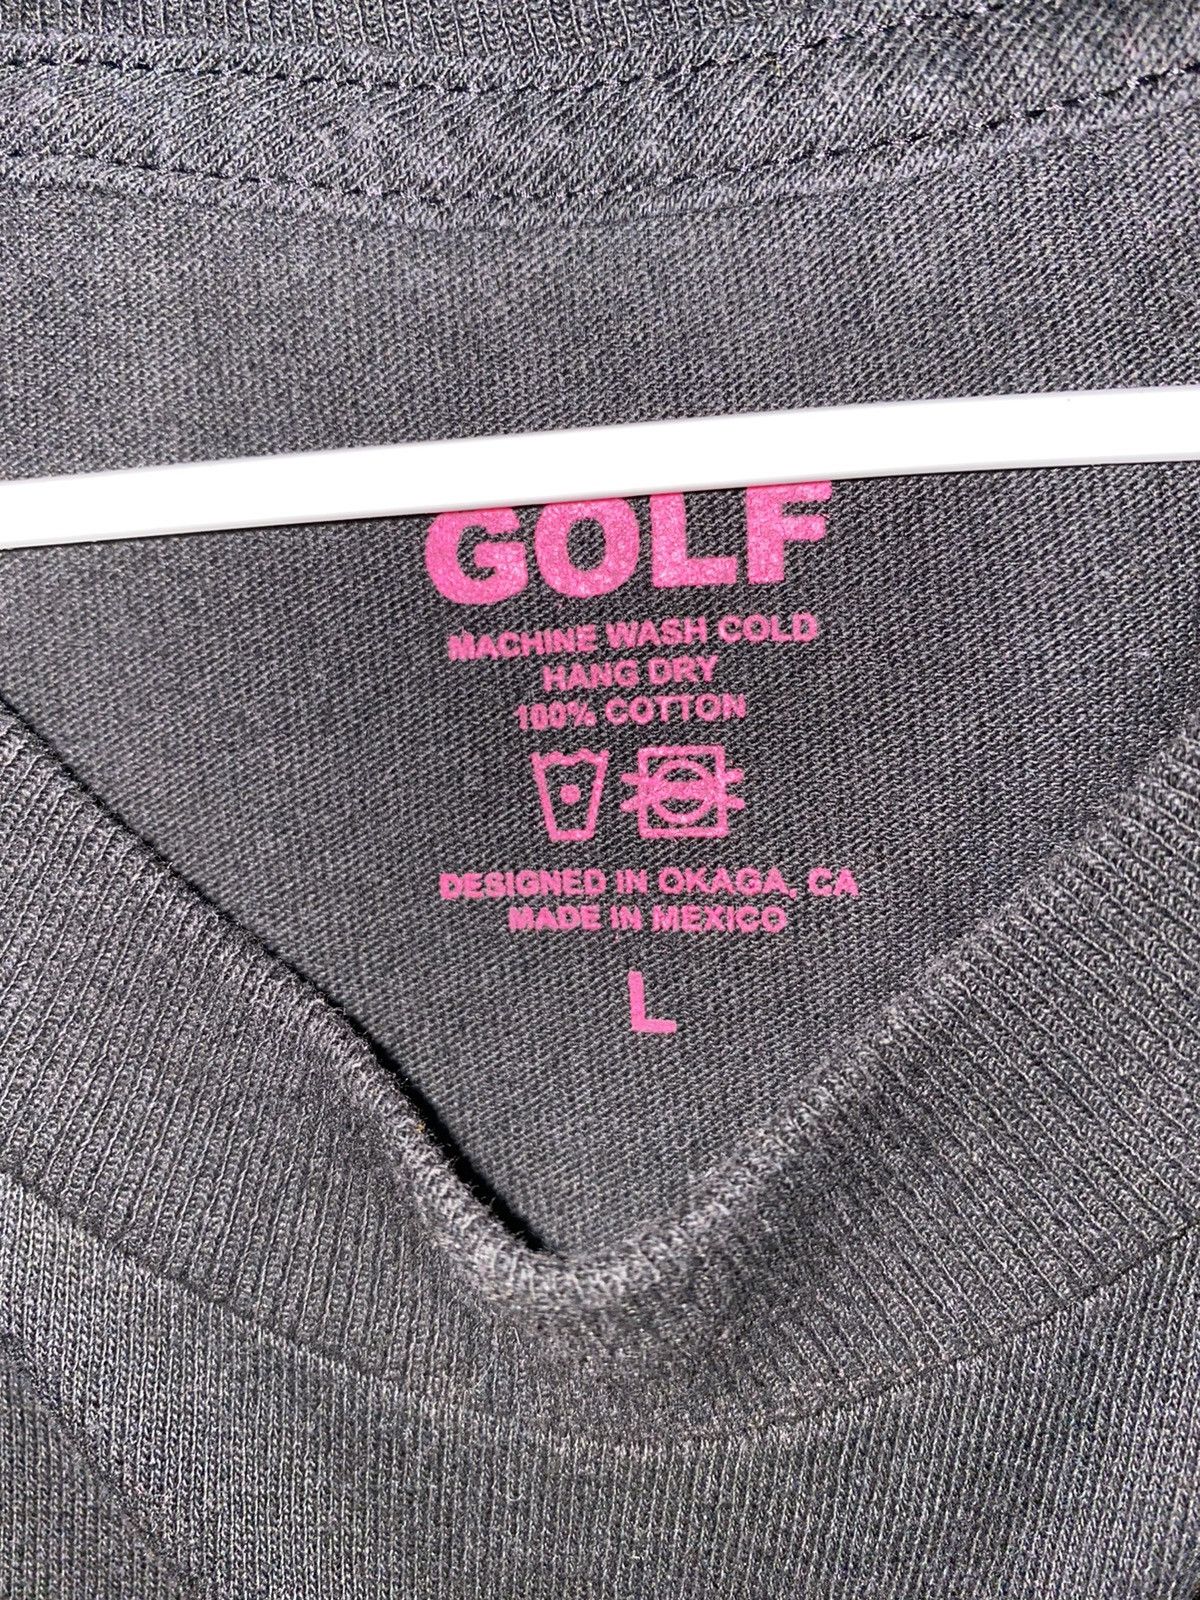 Golf Wang LA Exclusive Golf Wang Igor T-Shirt Size US L / EU 52-54 / 3 - 3 Thumbnail